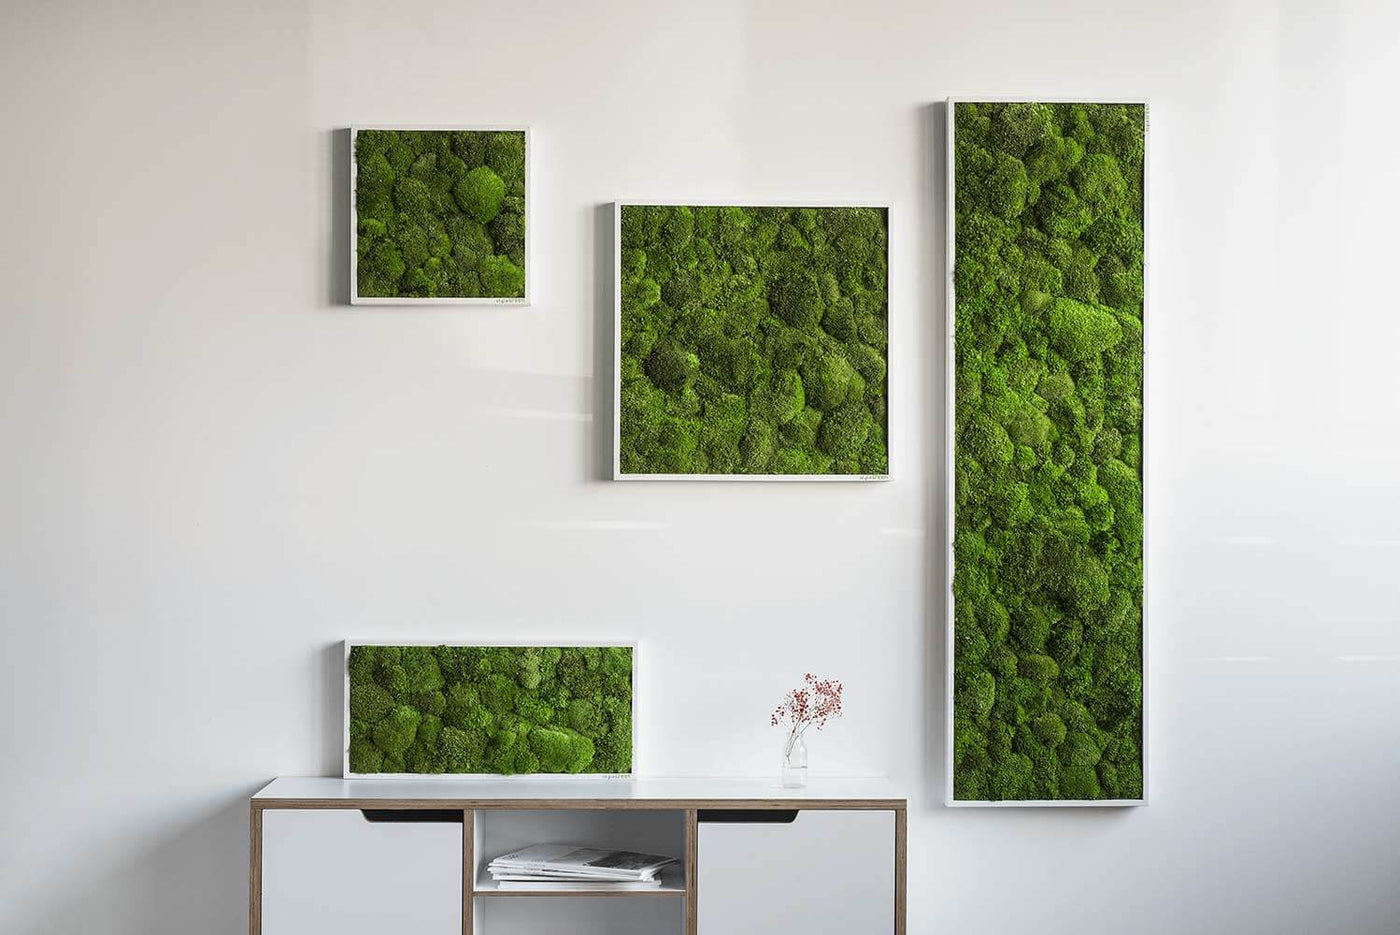 Wide Green Moss Wall Art (57x27cm)-Wall Decor-MOSS FRAMES, MOSS PICTURES, MOSS WALL ART, PLANTS-Forest Homes-Nature inspired decor-Nature decor